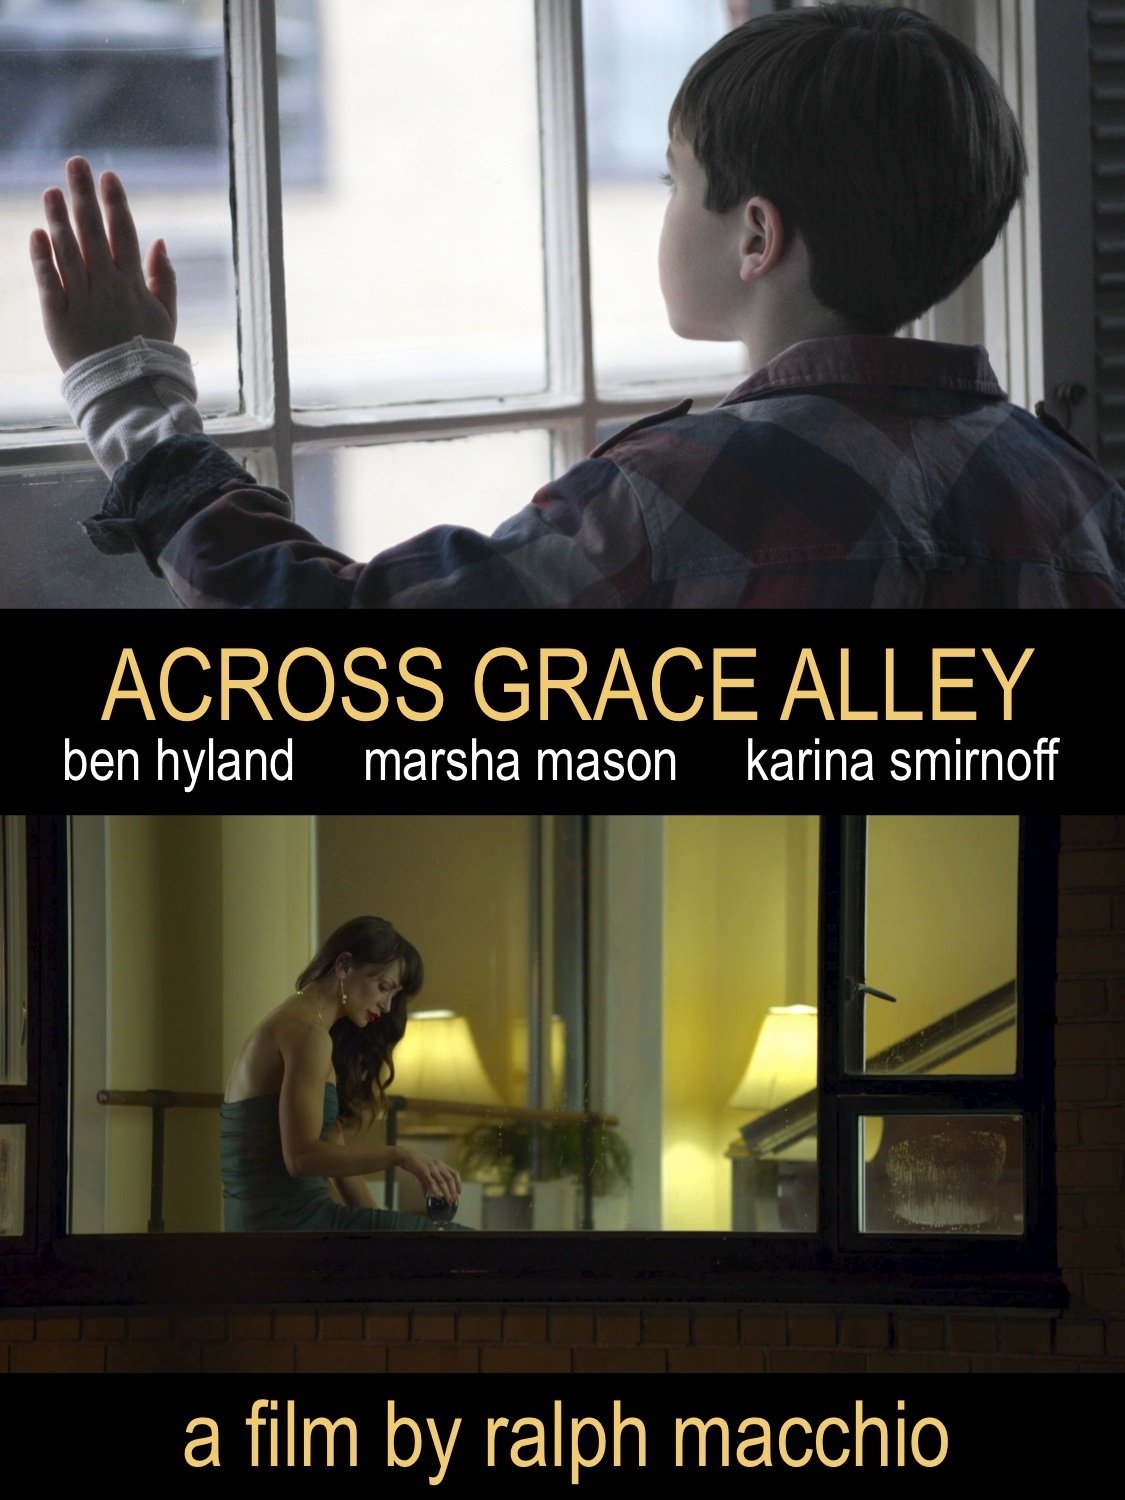 Across Grace Alley (2013) Screenshot 2 